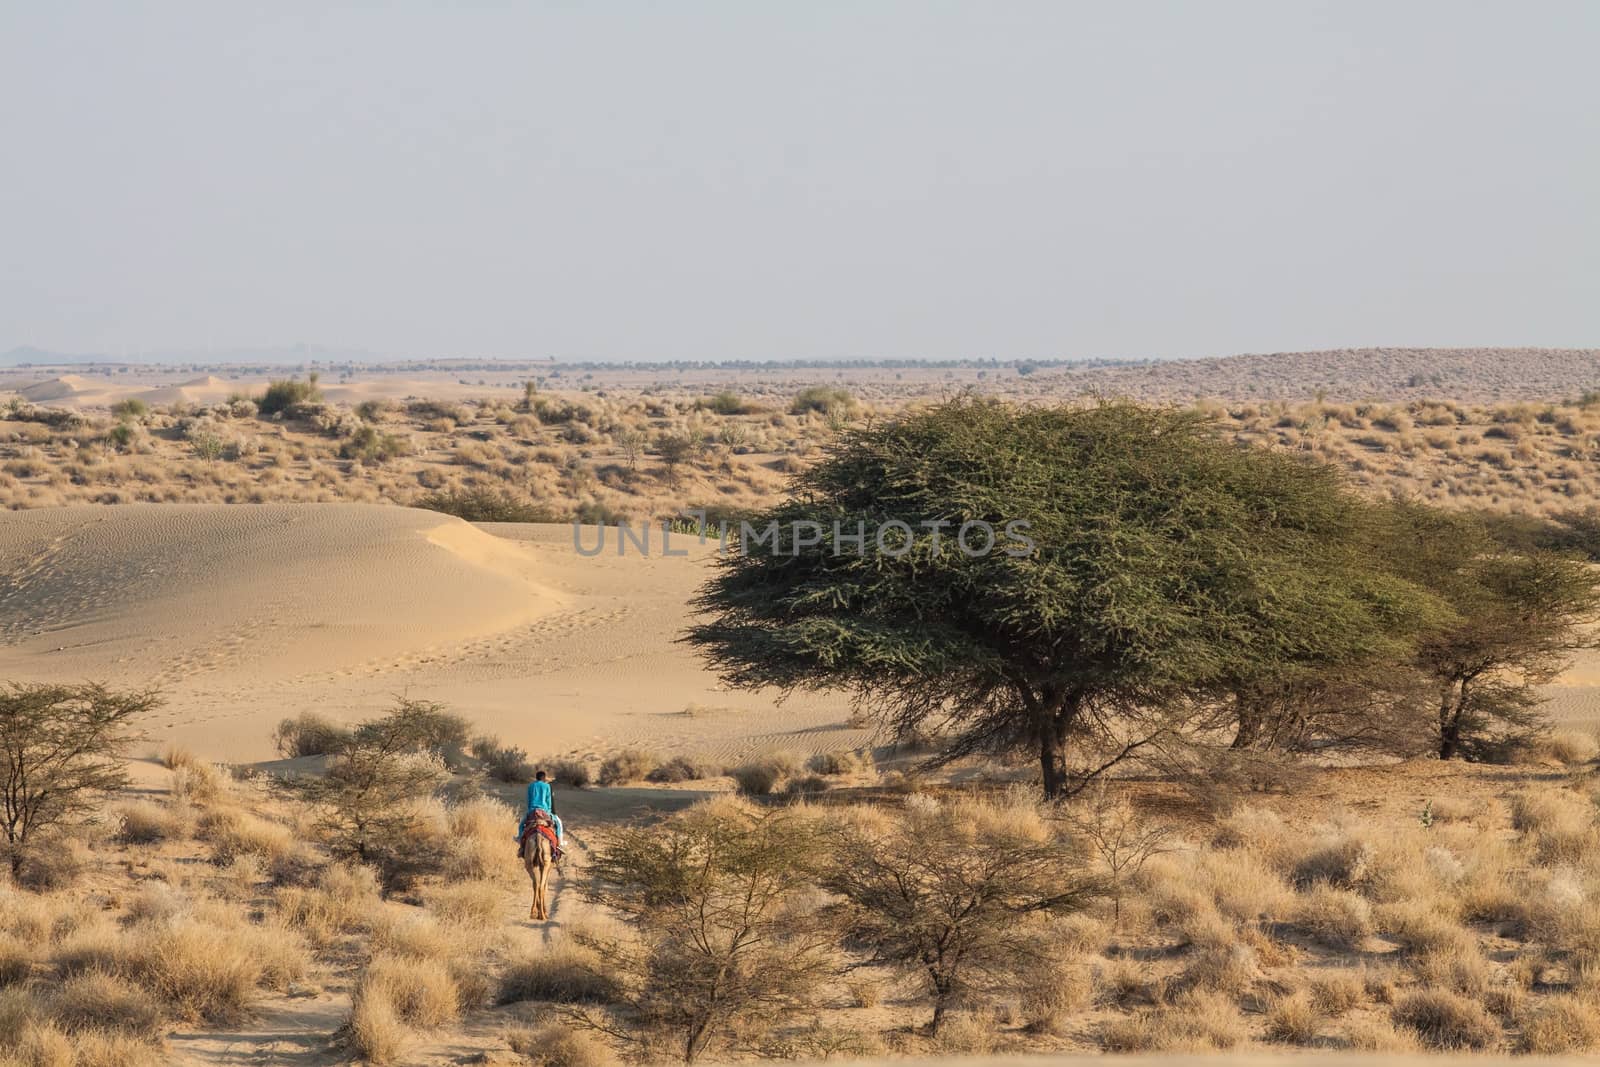 desert landscape green trees dry shrub single camel with  rider by giddavr